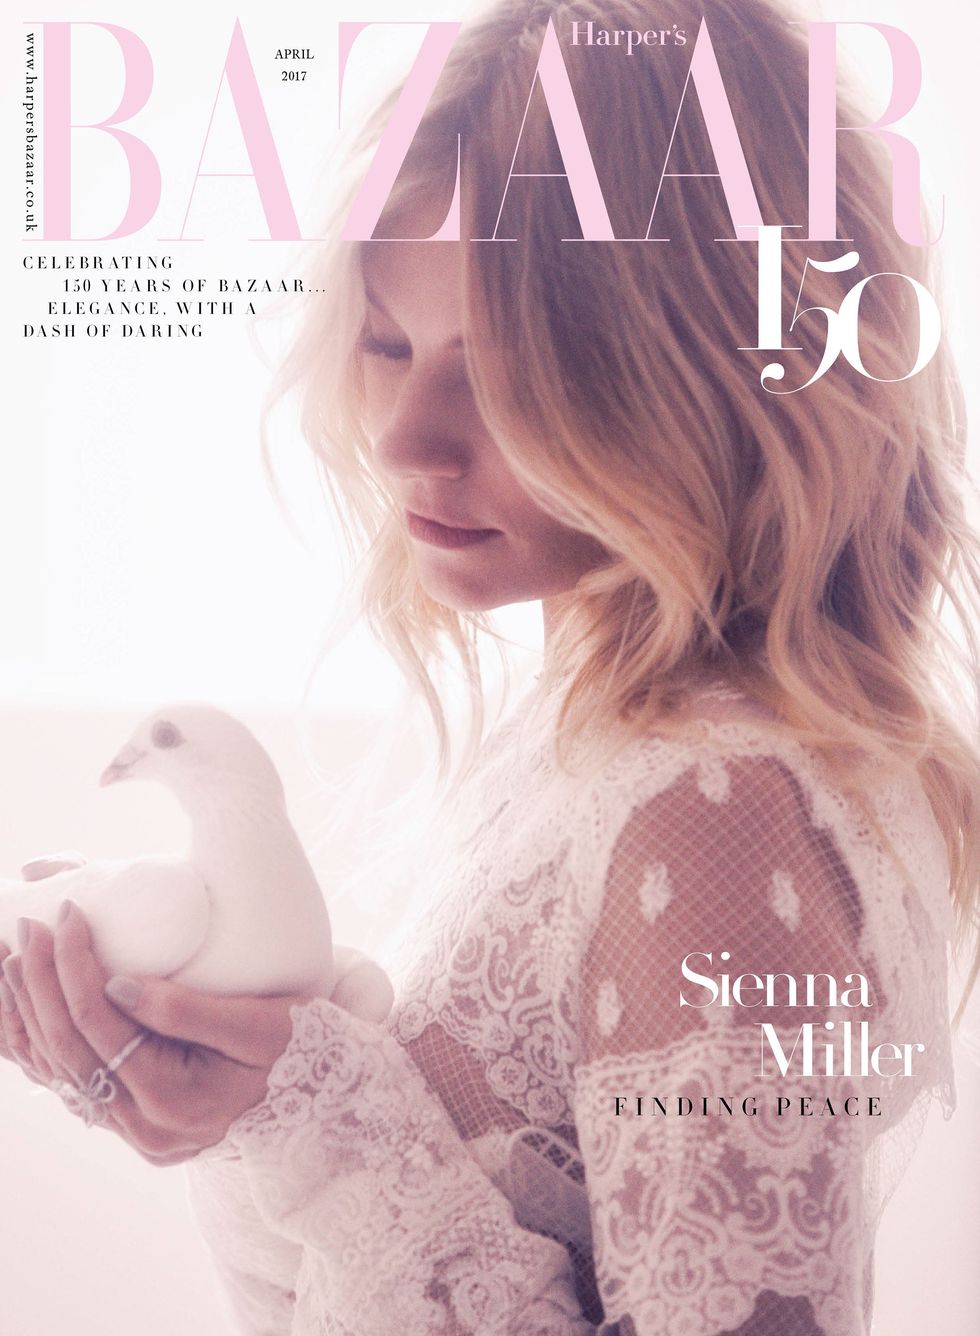 Sienna Miller on the subscribers cover of Harper's Bazaar April 2017